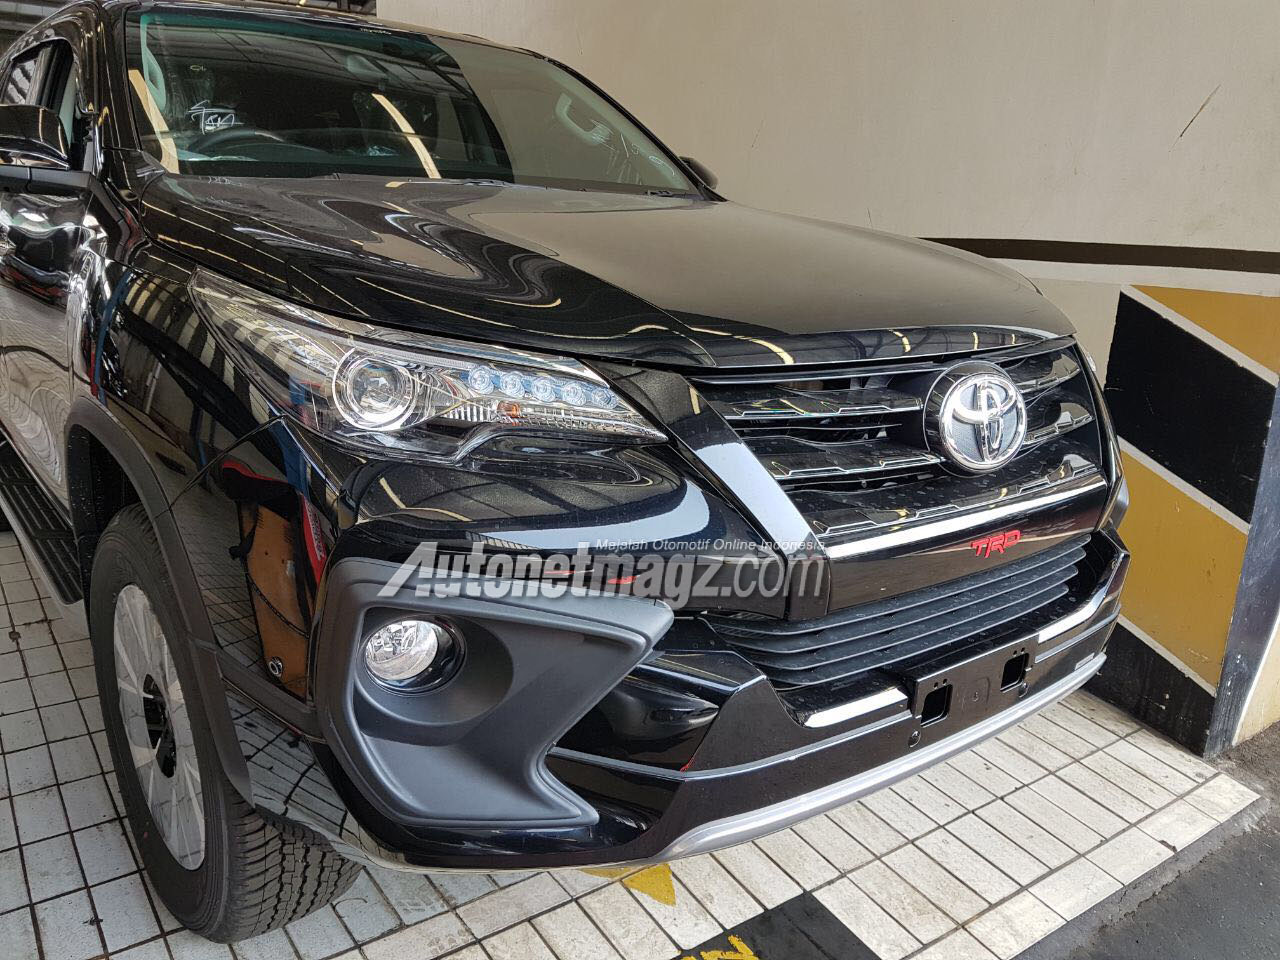 Toyota Fortuner Autonetmagz Review Mobil Dan Motor Baru Indonesia